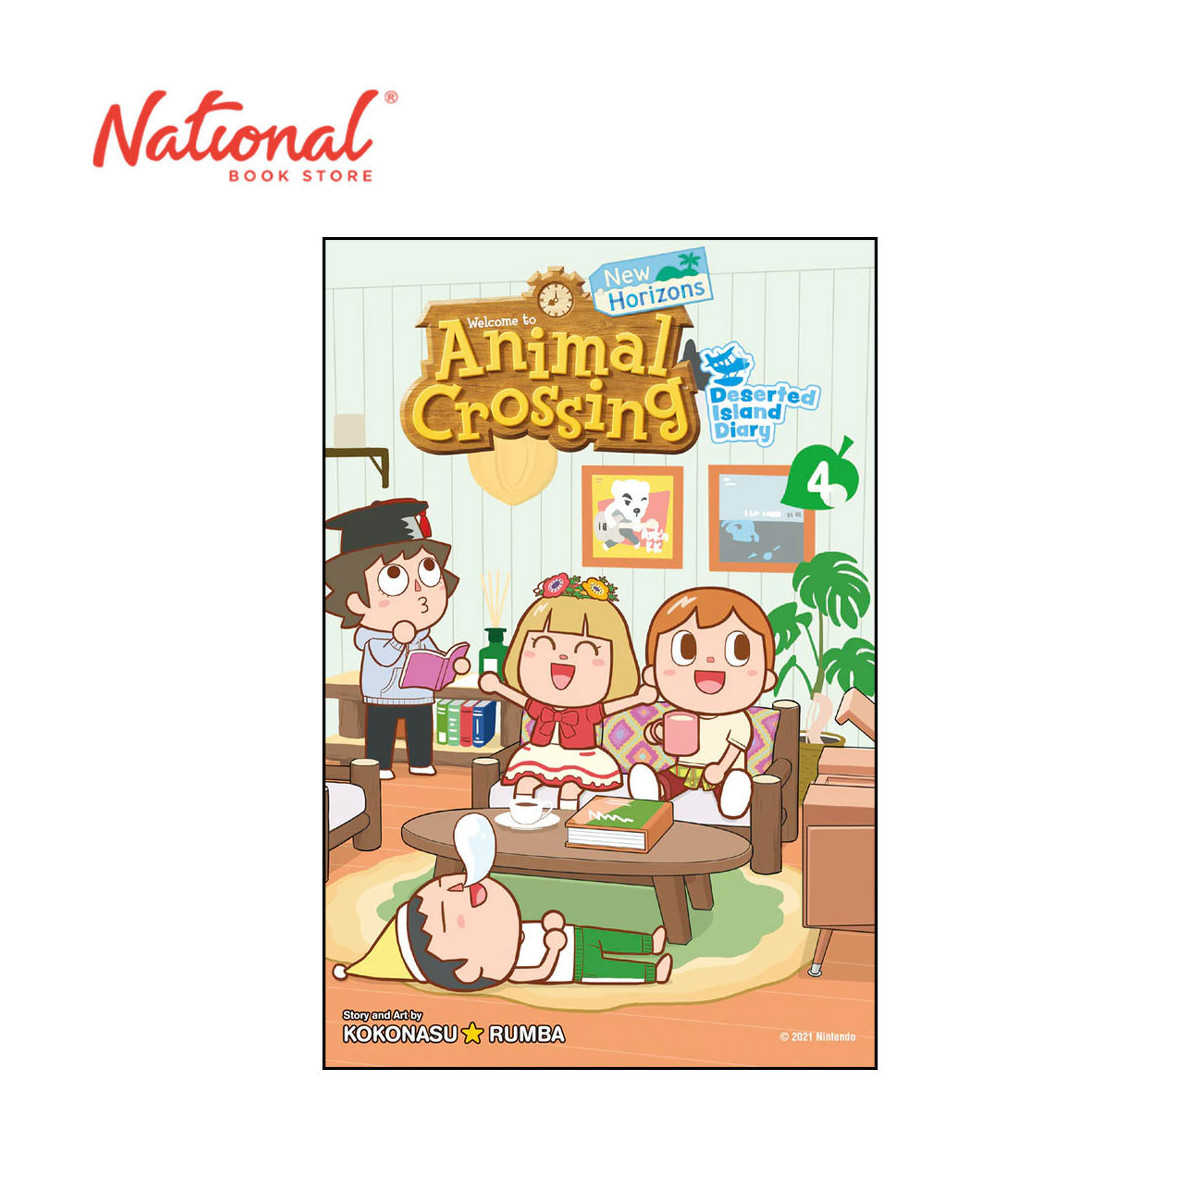 Animal Crossing: Deserted Island Diary No. 4 by Kokonasu & Rumba - Trade Paperback - Book for Kids - Manga